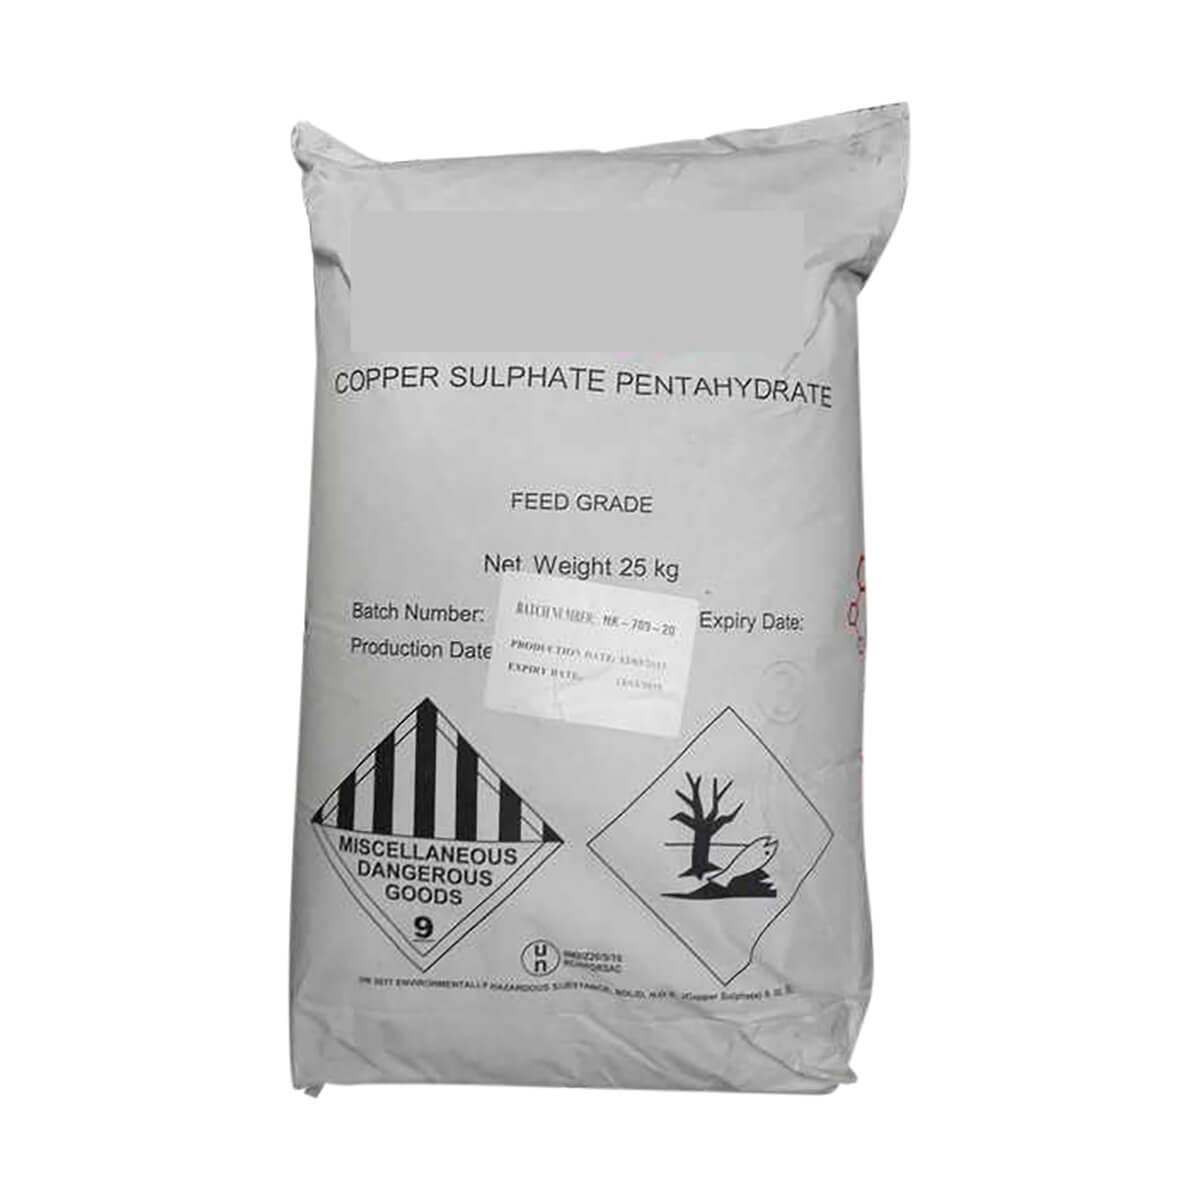 Copper Sulphate - 25 kg Bag